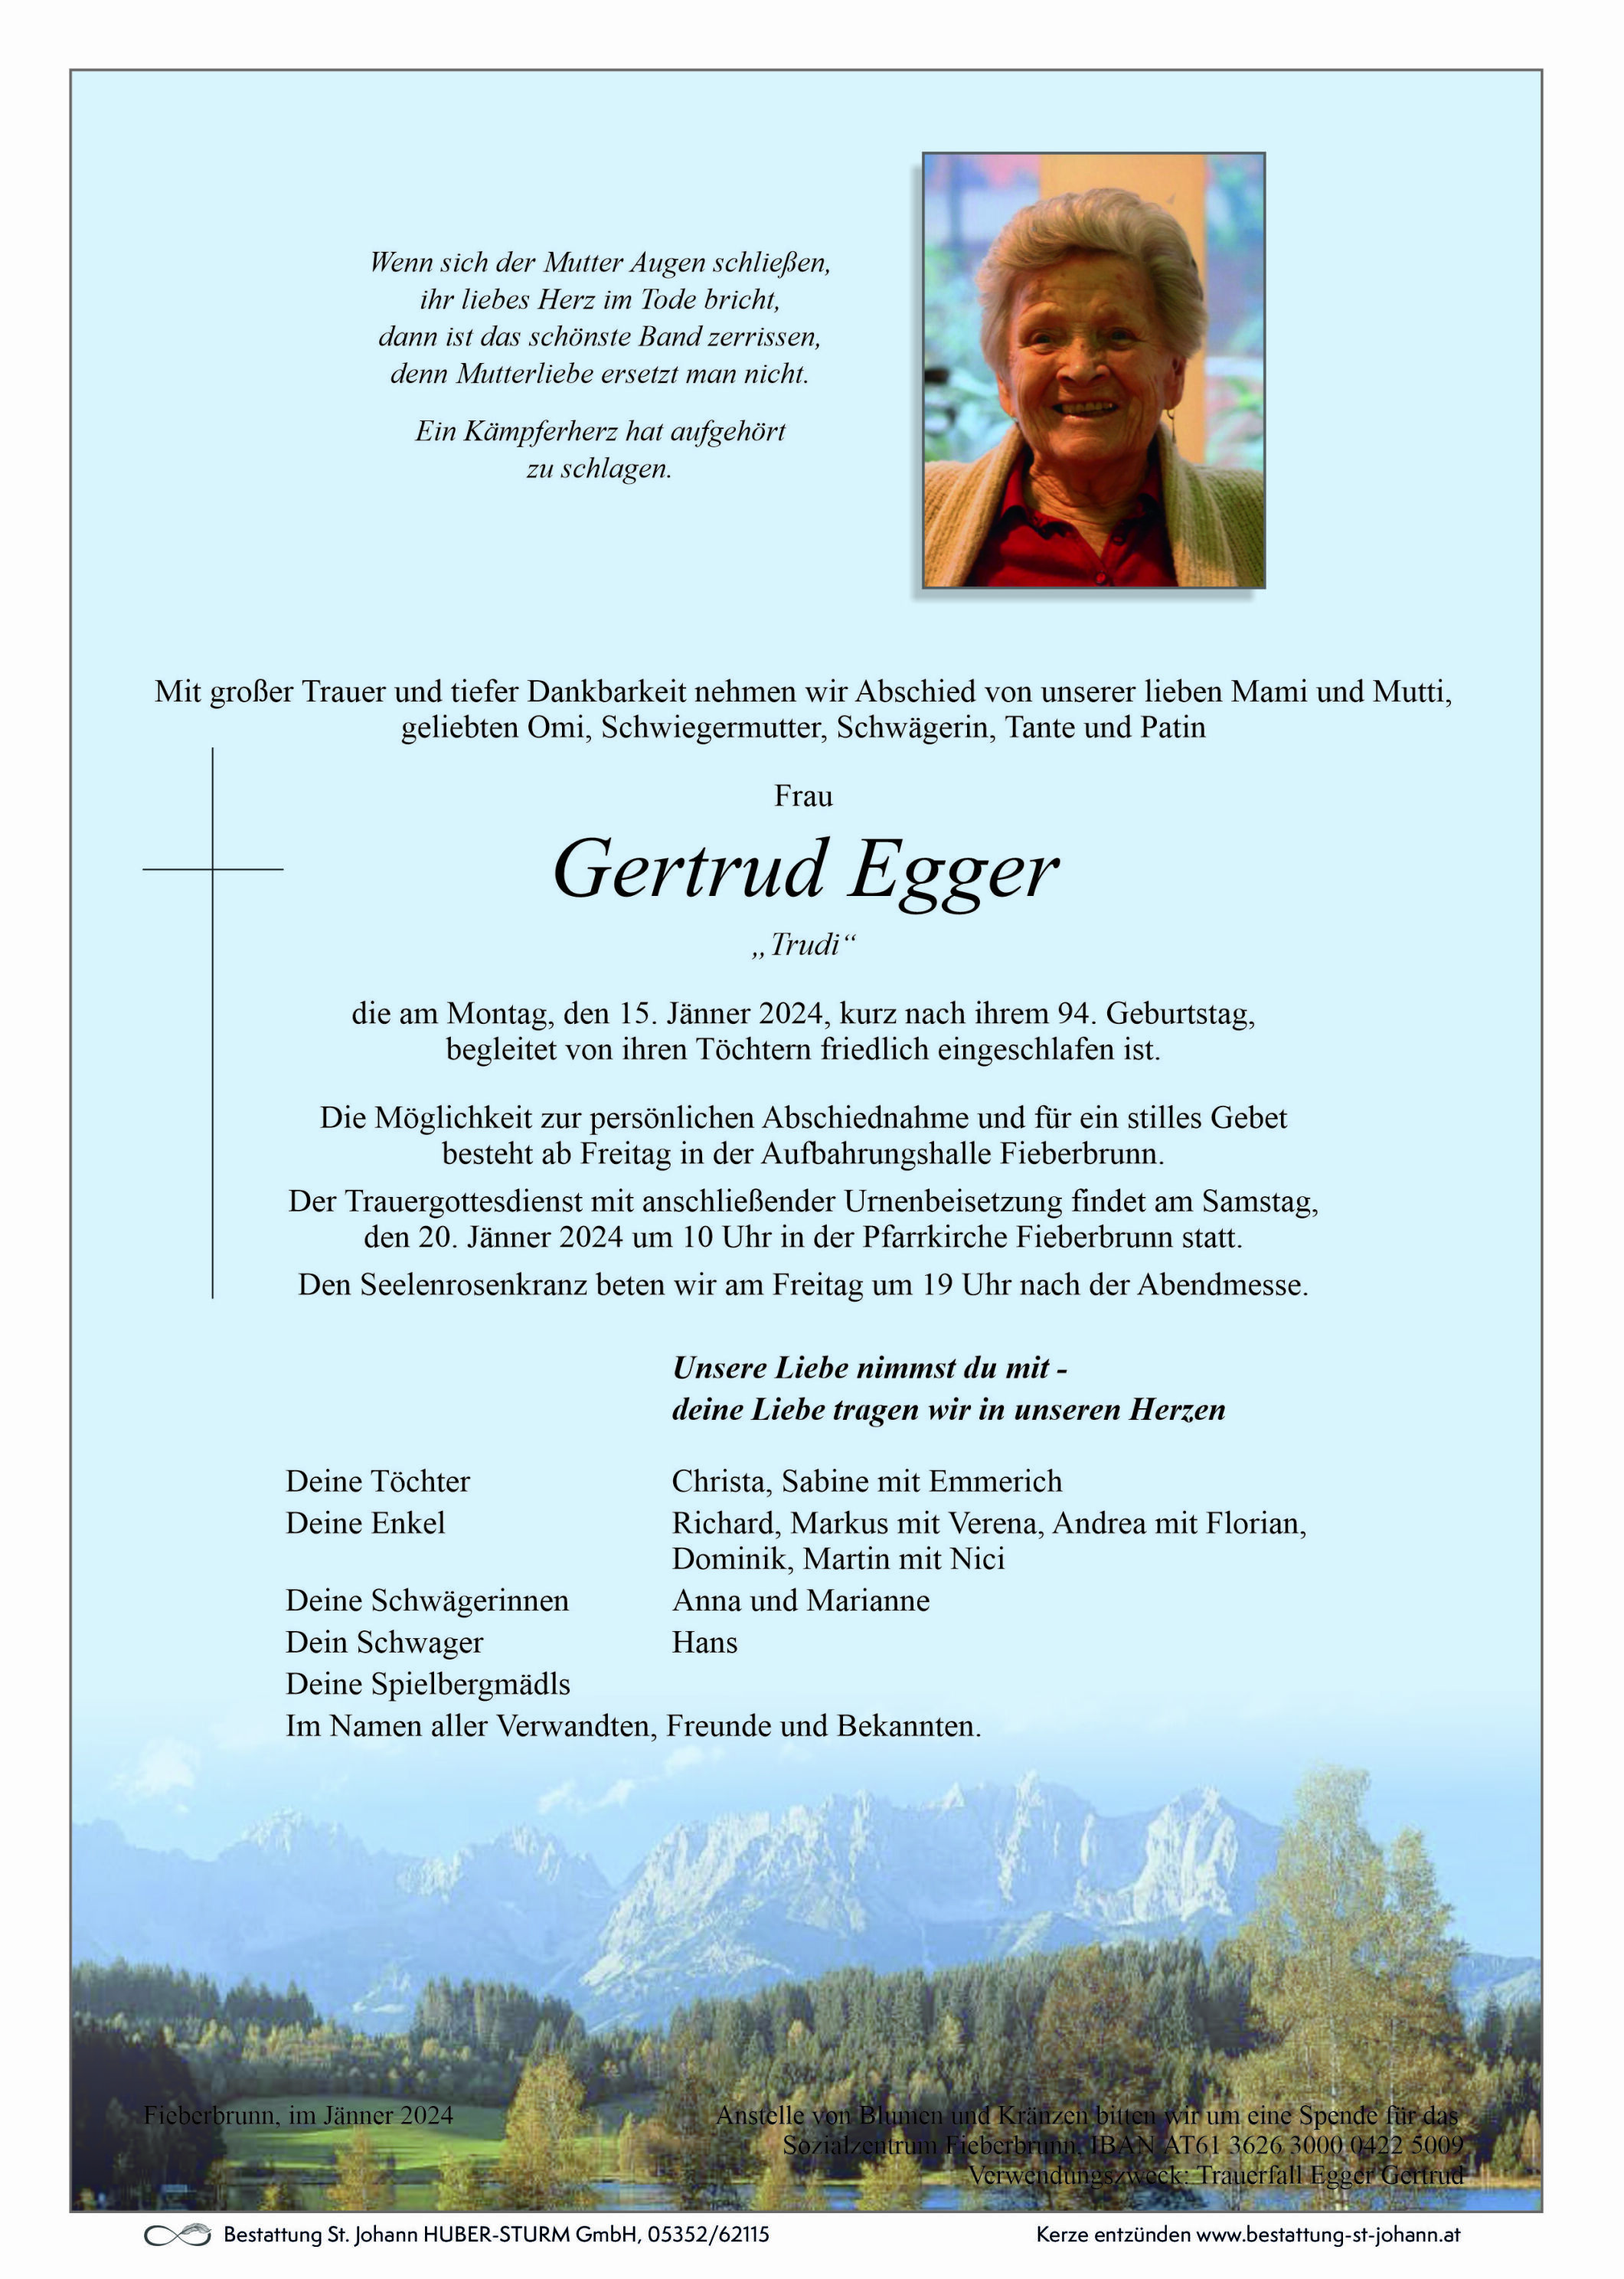 Gertrud Egger